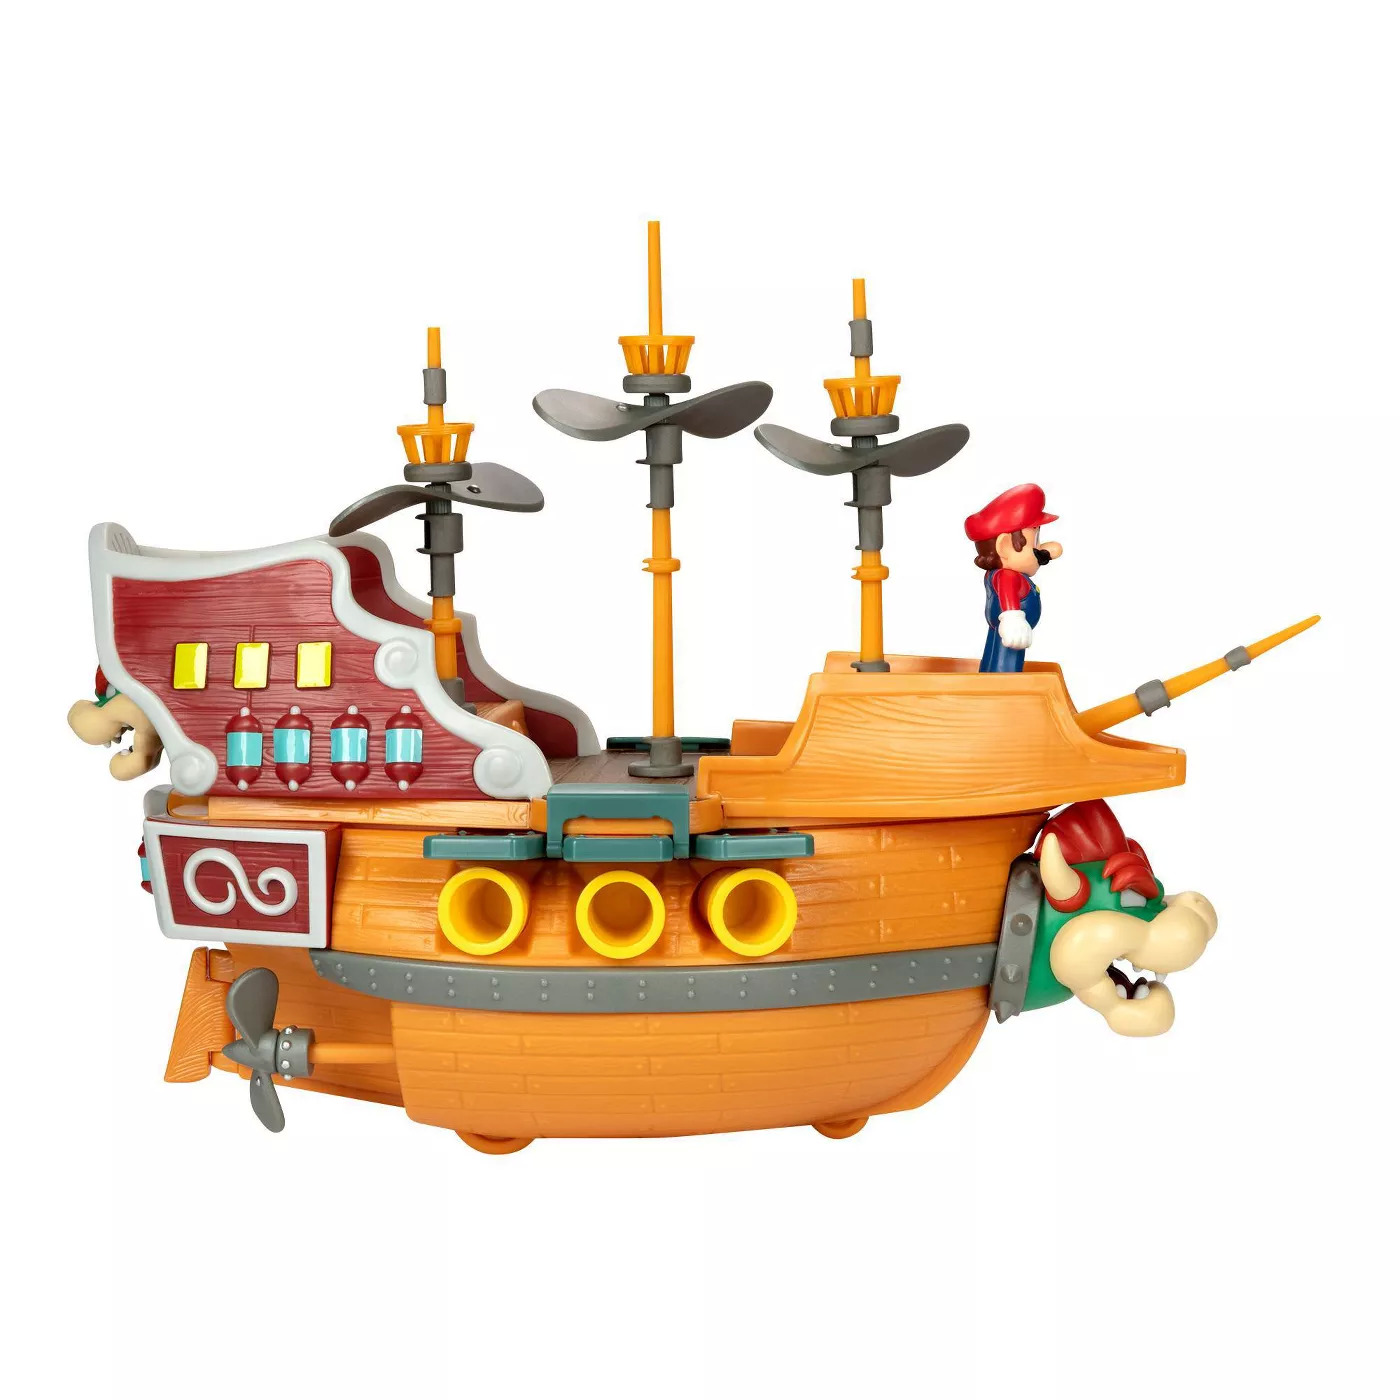 Nintendo Super Mario DLX Bowser's Airship Playset $29.99 + Free Shipping on $35+